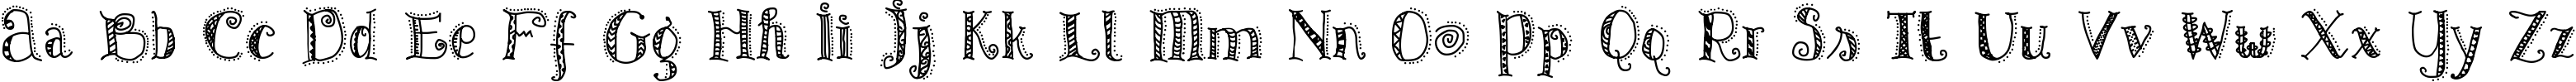 Пример написания английского алфавита шрифтом Patterns & Dots